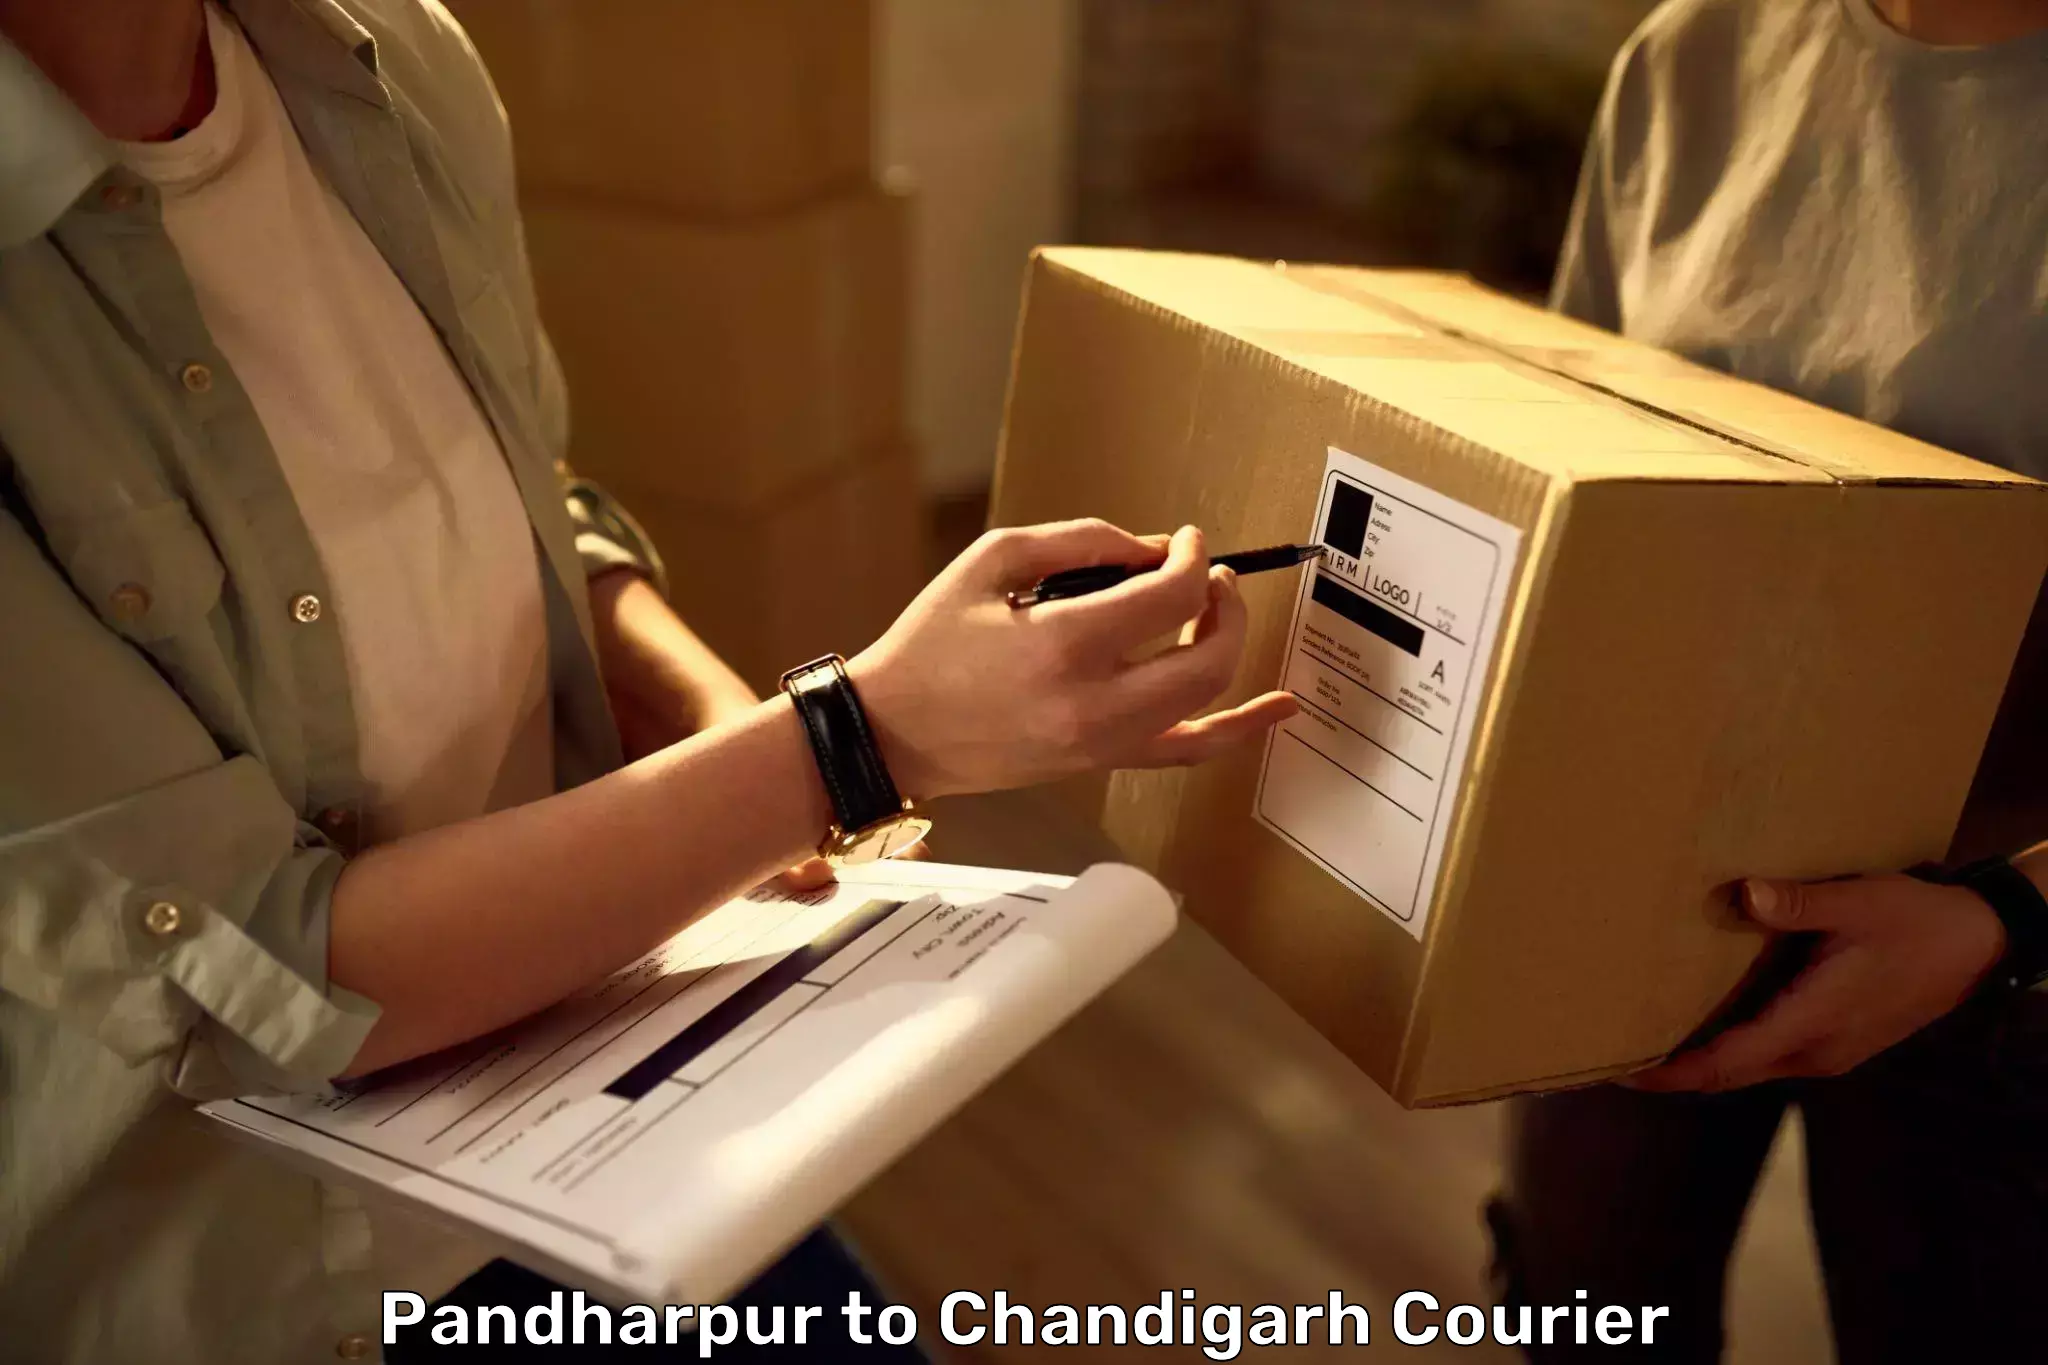 Luggage shipment specialists Pandharpur to Chandigarh